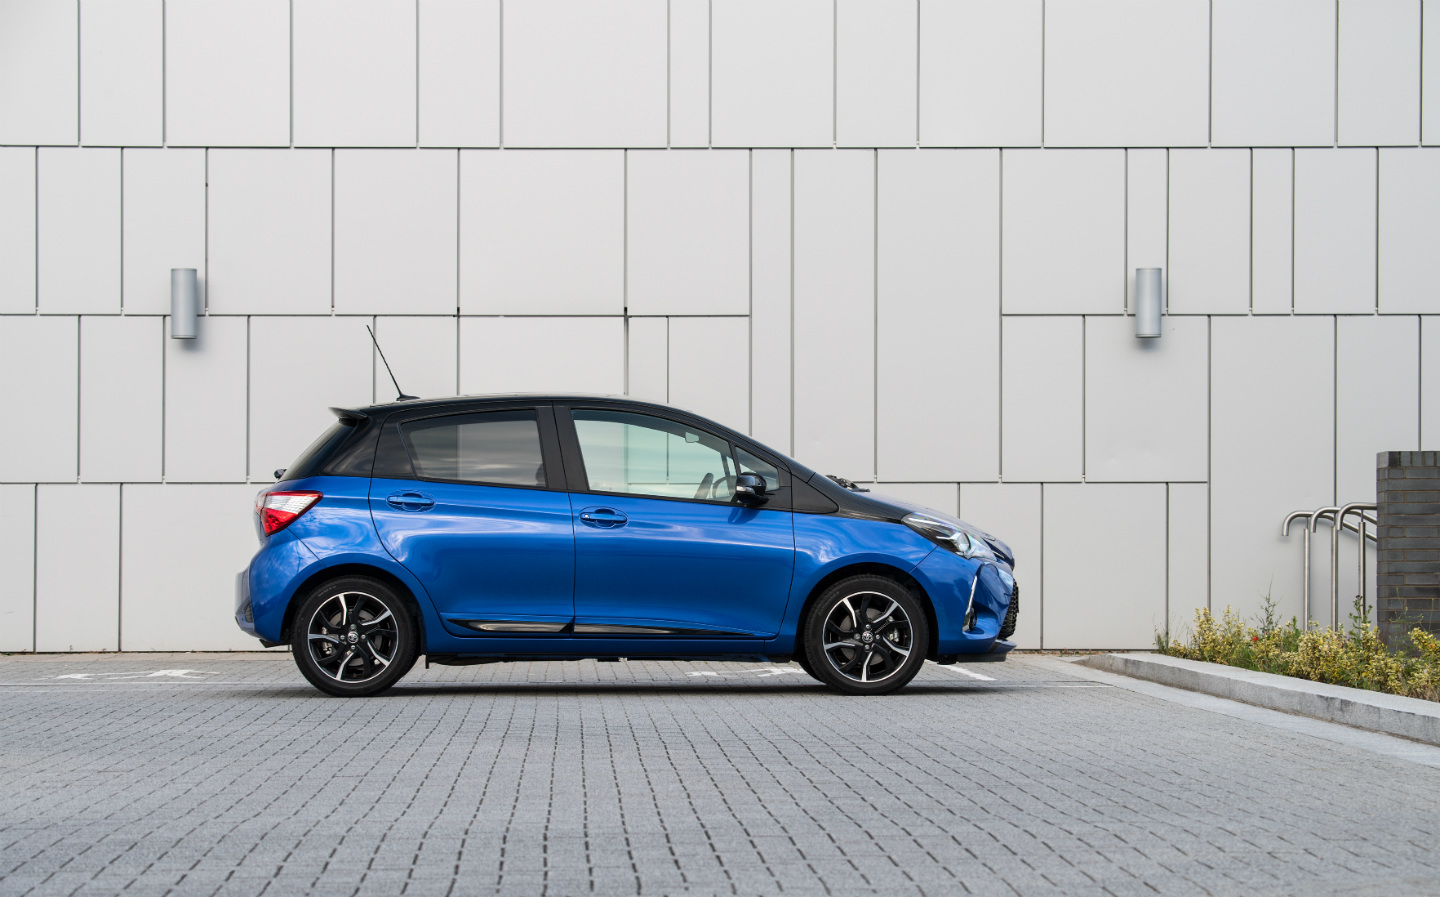 The best eco-friendly hybrid small cars: Toyota Yaris hybrid 2018